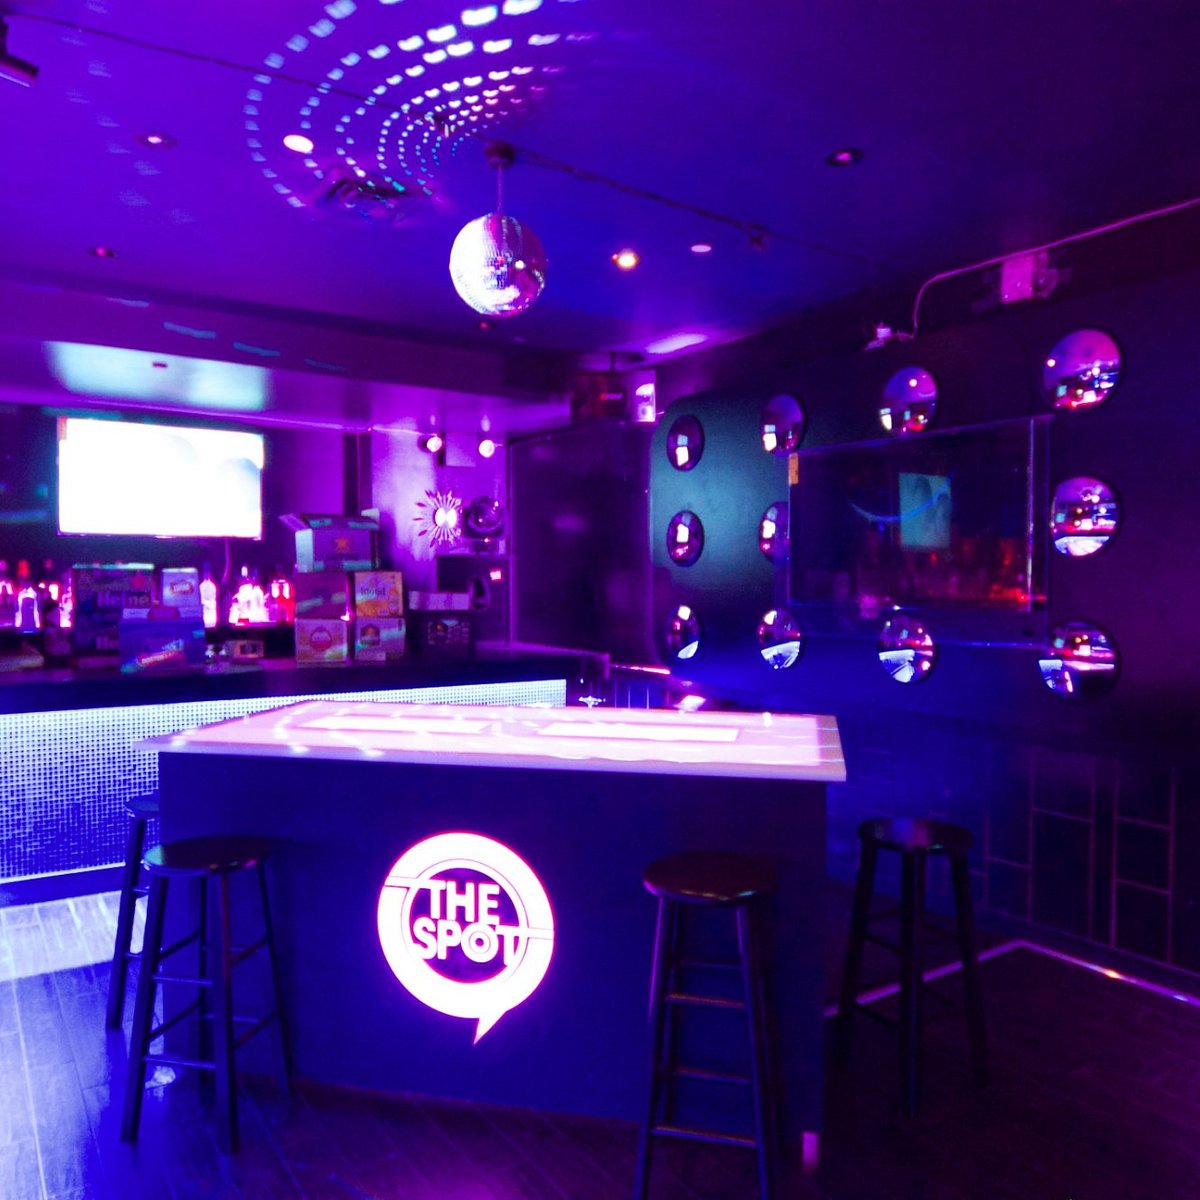 The Spot Karaoke Lounge New York 2022 Alles Wat U Moet Weten Voordat Je Gaat Tripadvisor